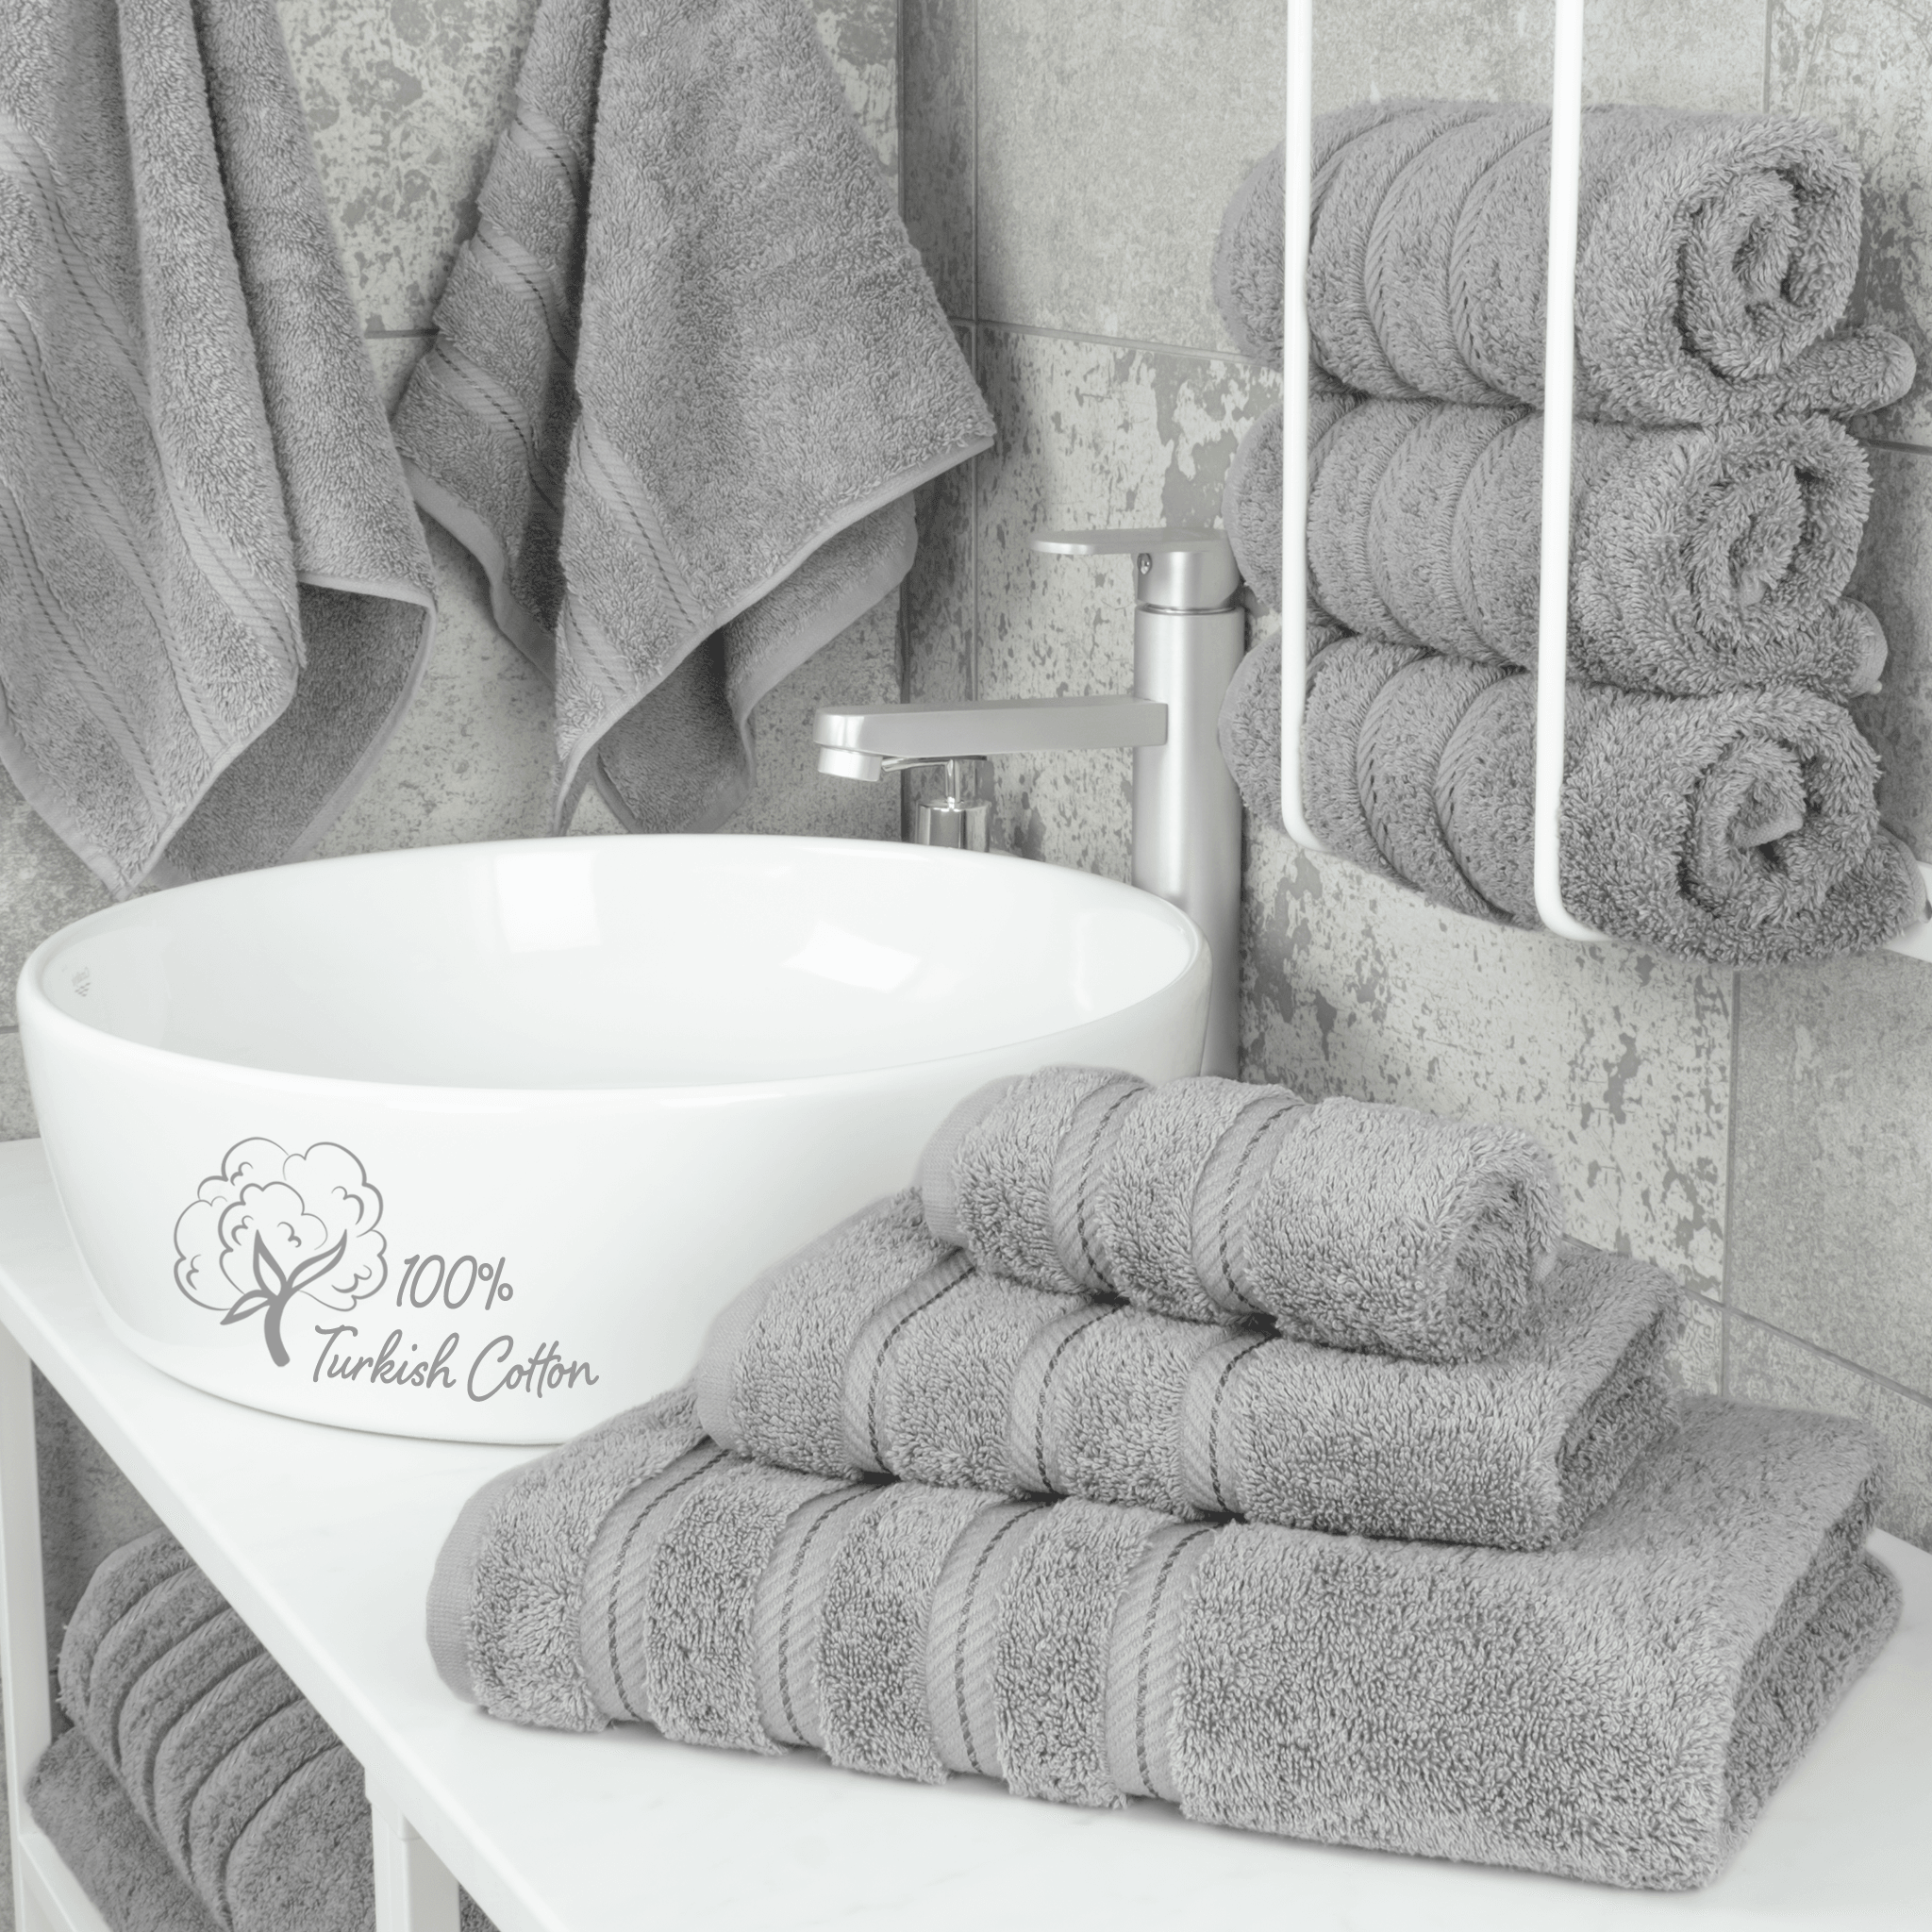 Bath Towels  Luxury & 100% Turkish Cotton - American Soft Linen